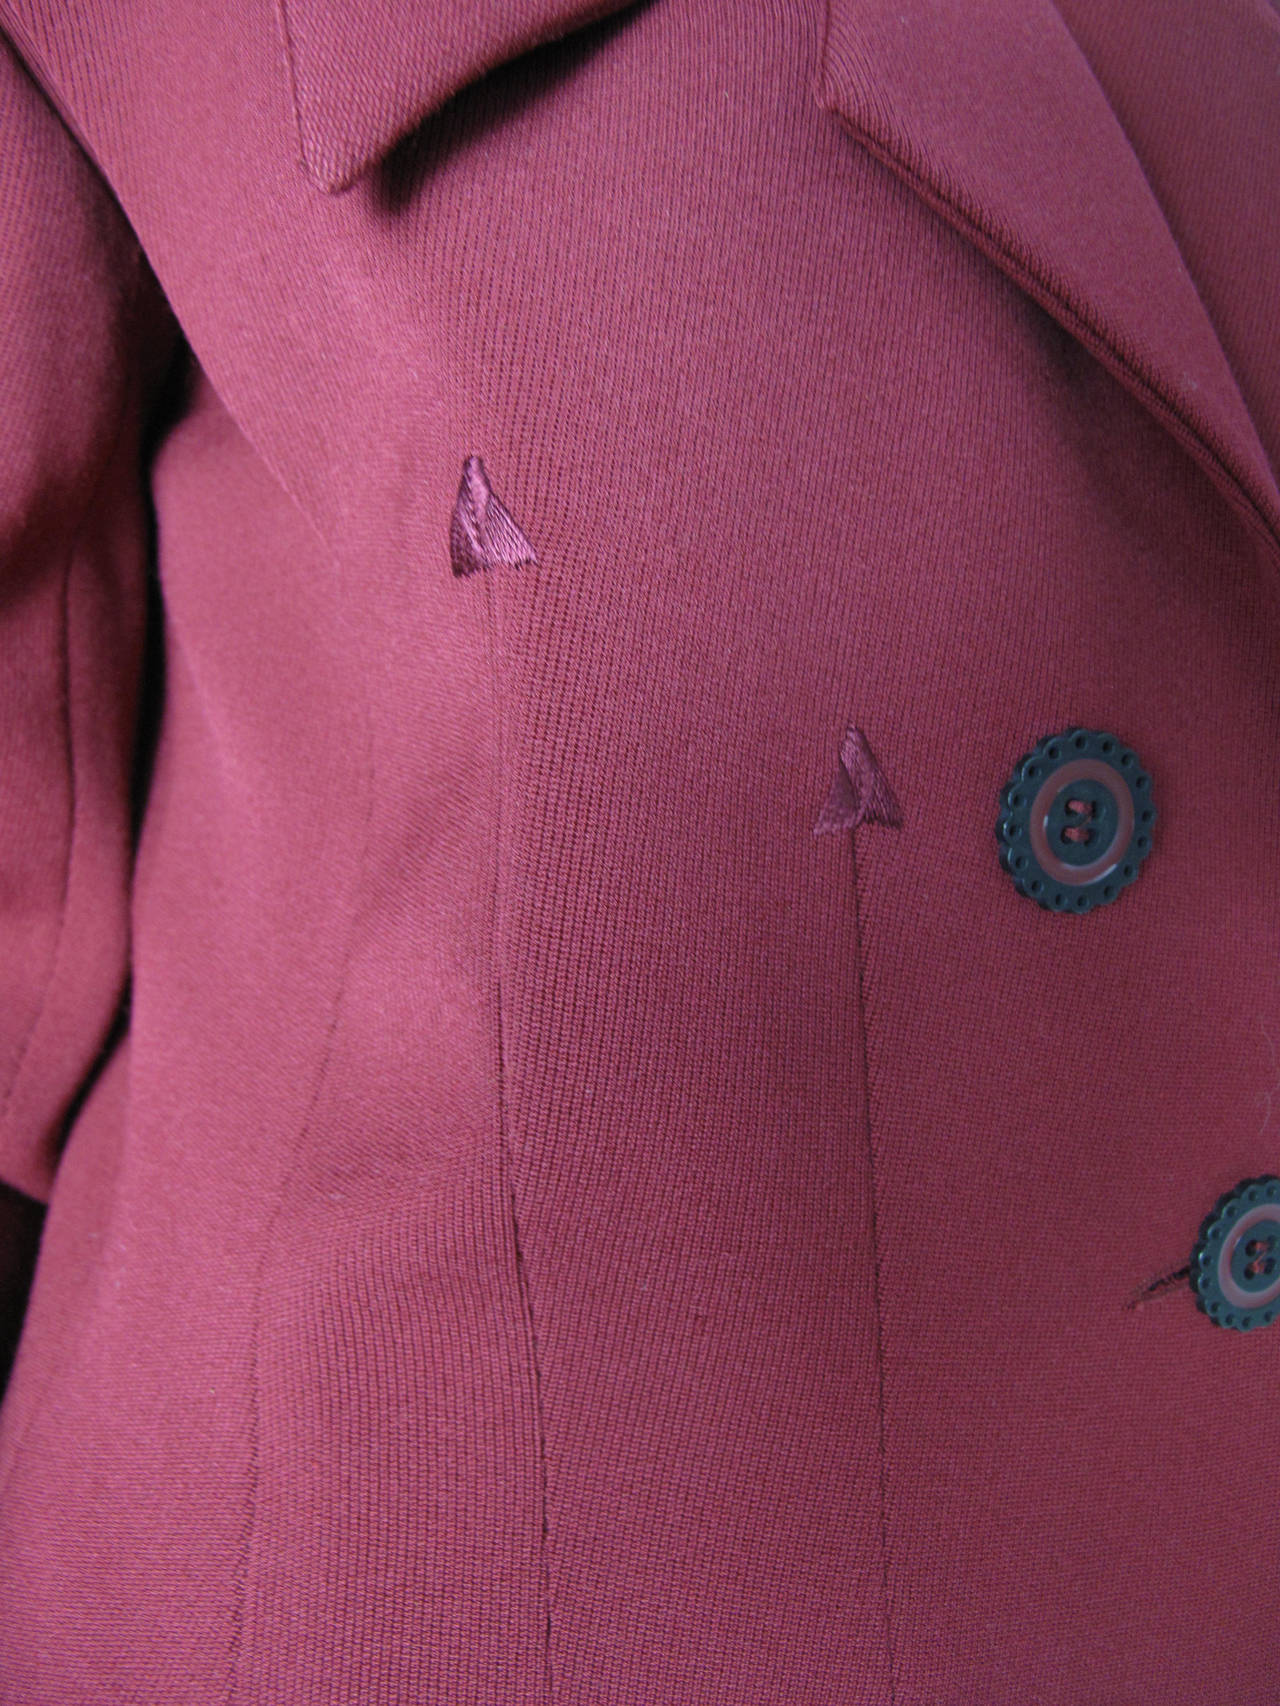 Karl Lagerfeld maroon wool gabardine suit with arrow stitching. Jacket: 42" bust, 34" waist, 23 1/2" sleeve, 40" hips, 17 1/2" shoulder, 29" length. Skirt: 28" waist, 36" hips, 28" length.  Condition: